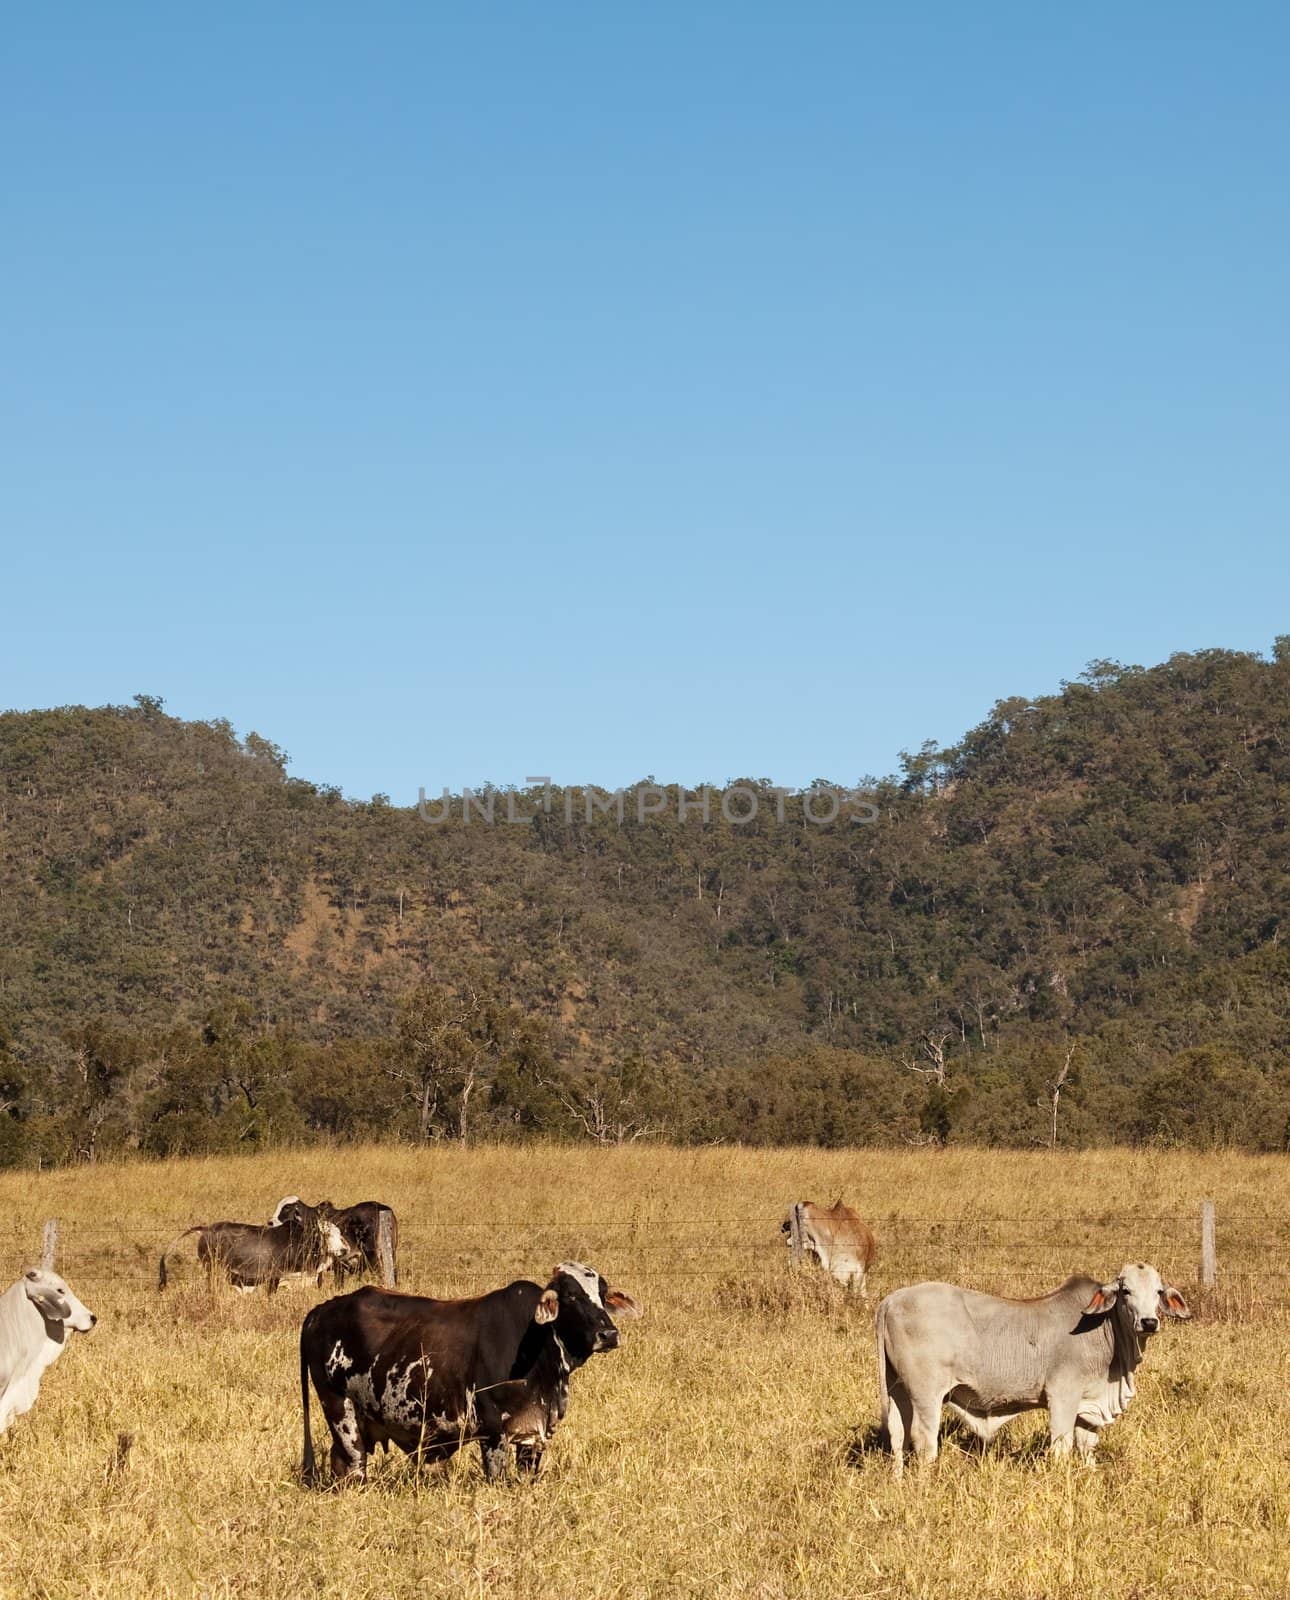 Australian Cows and sky portrait view by sherj